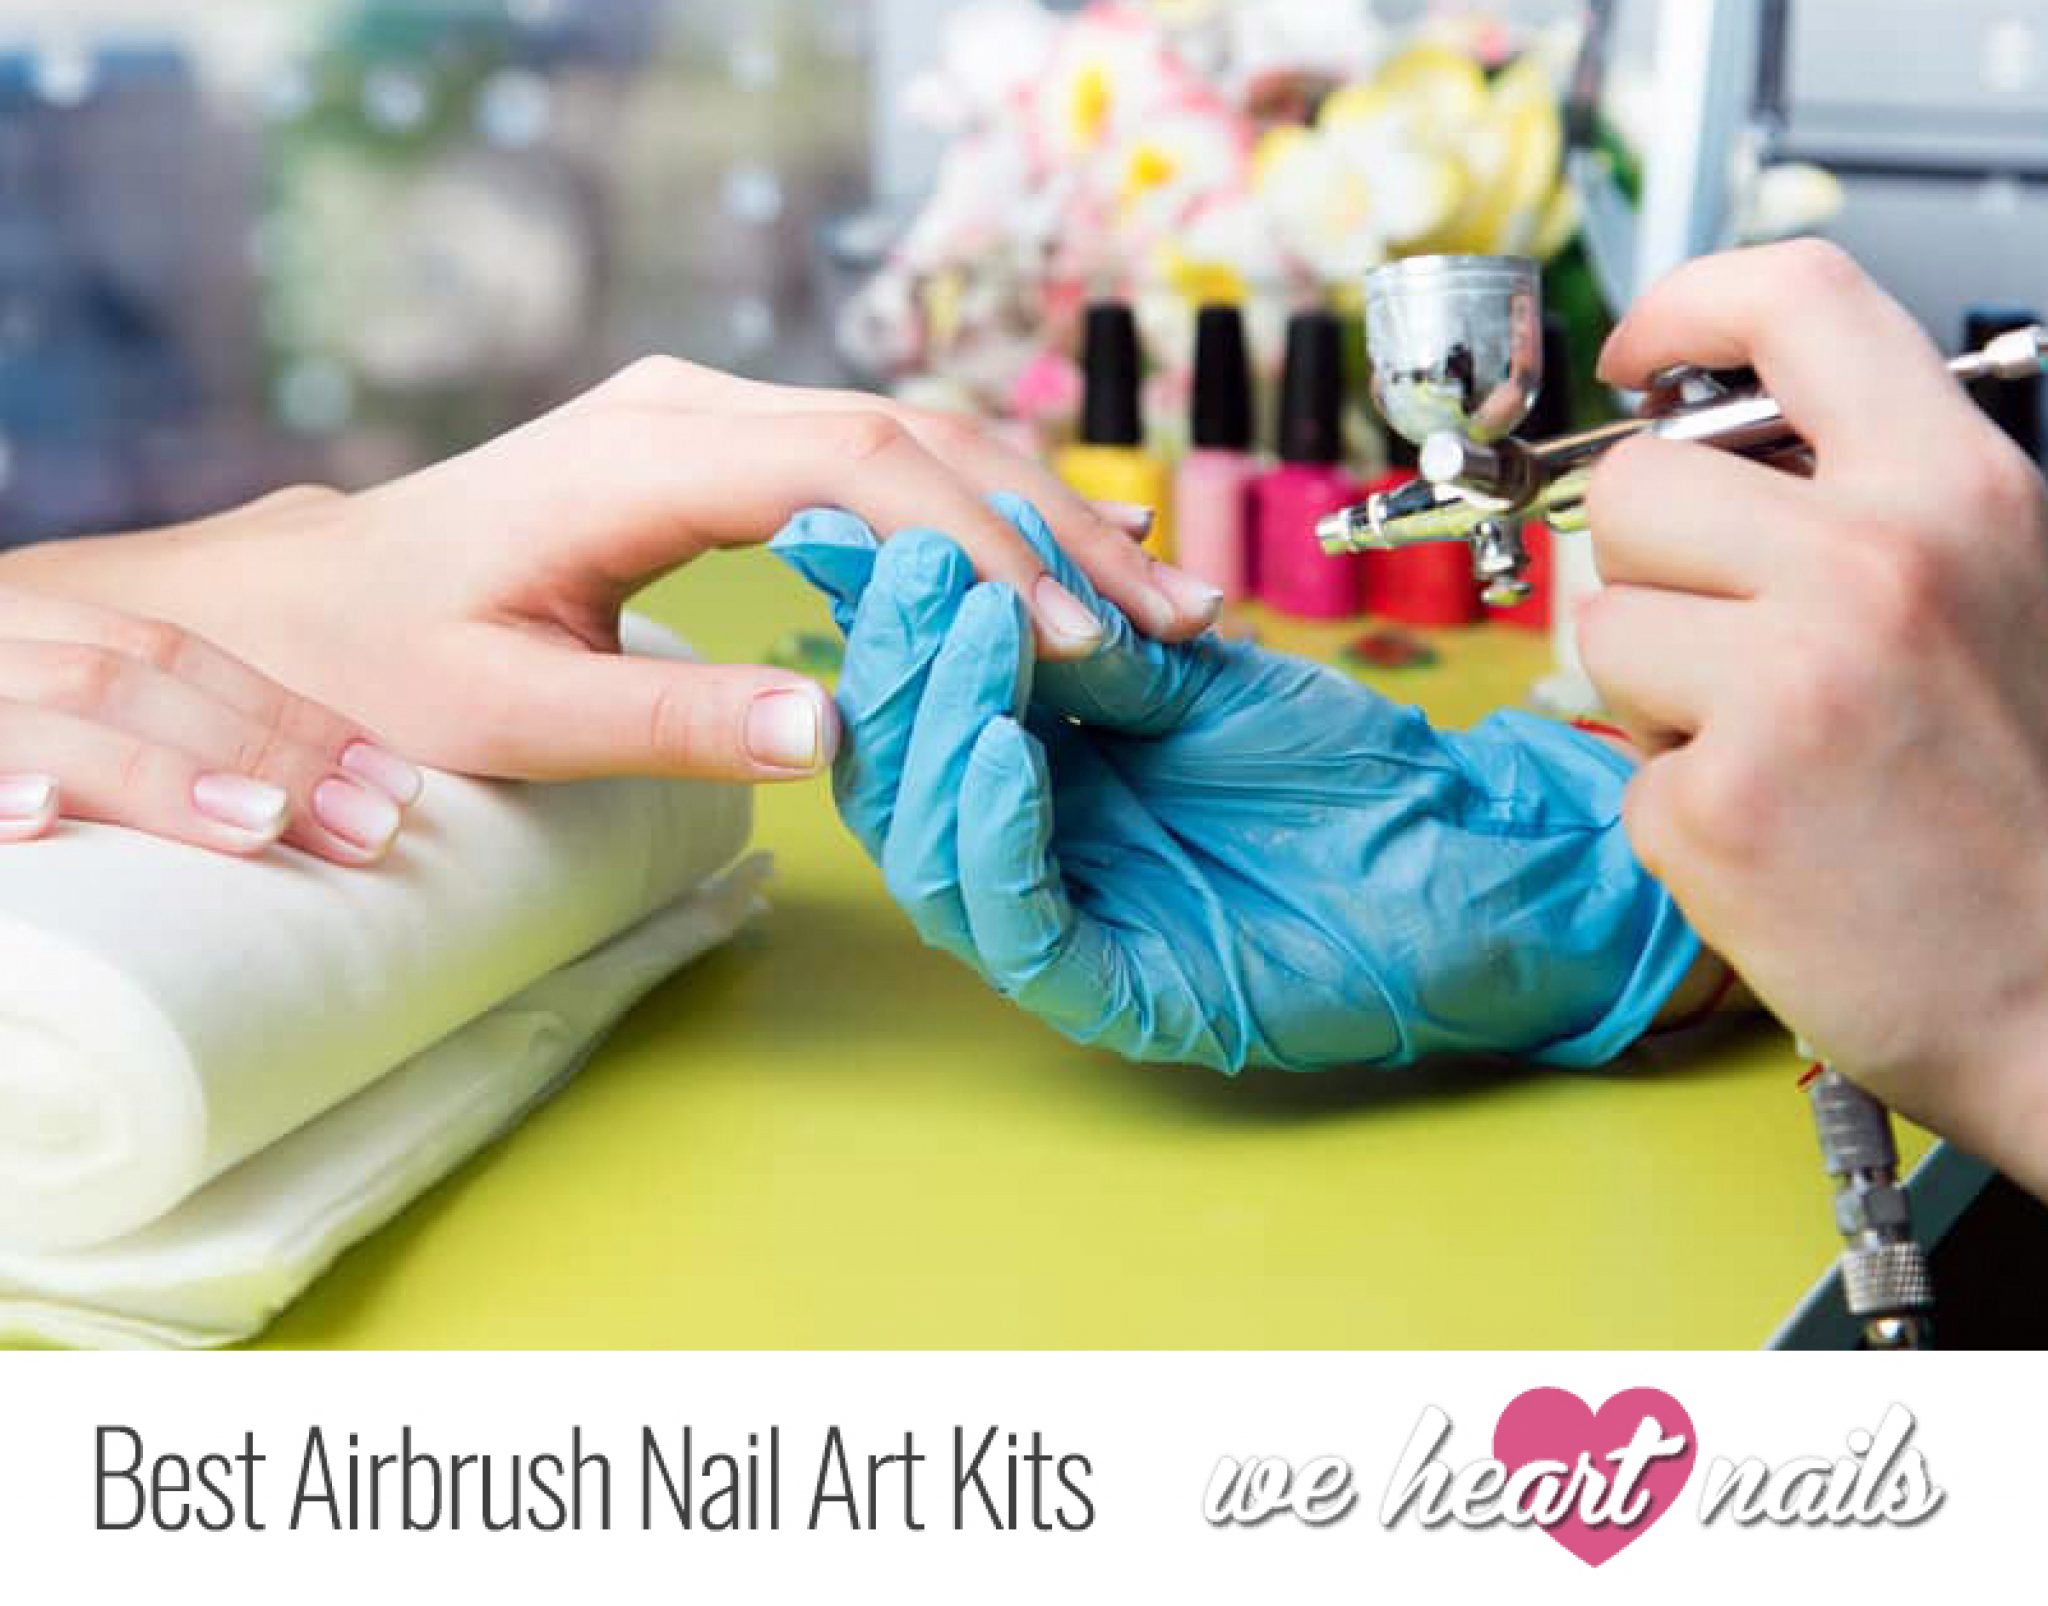 1. Aerographe Airbrush Nail Art Kit - wide 5